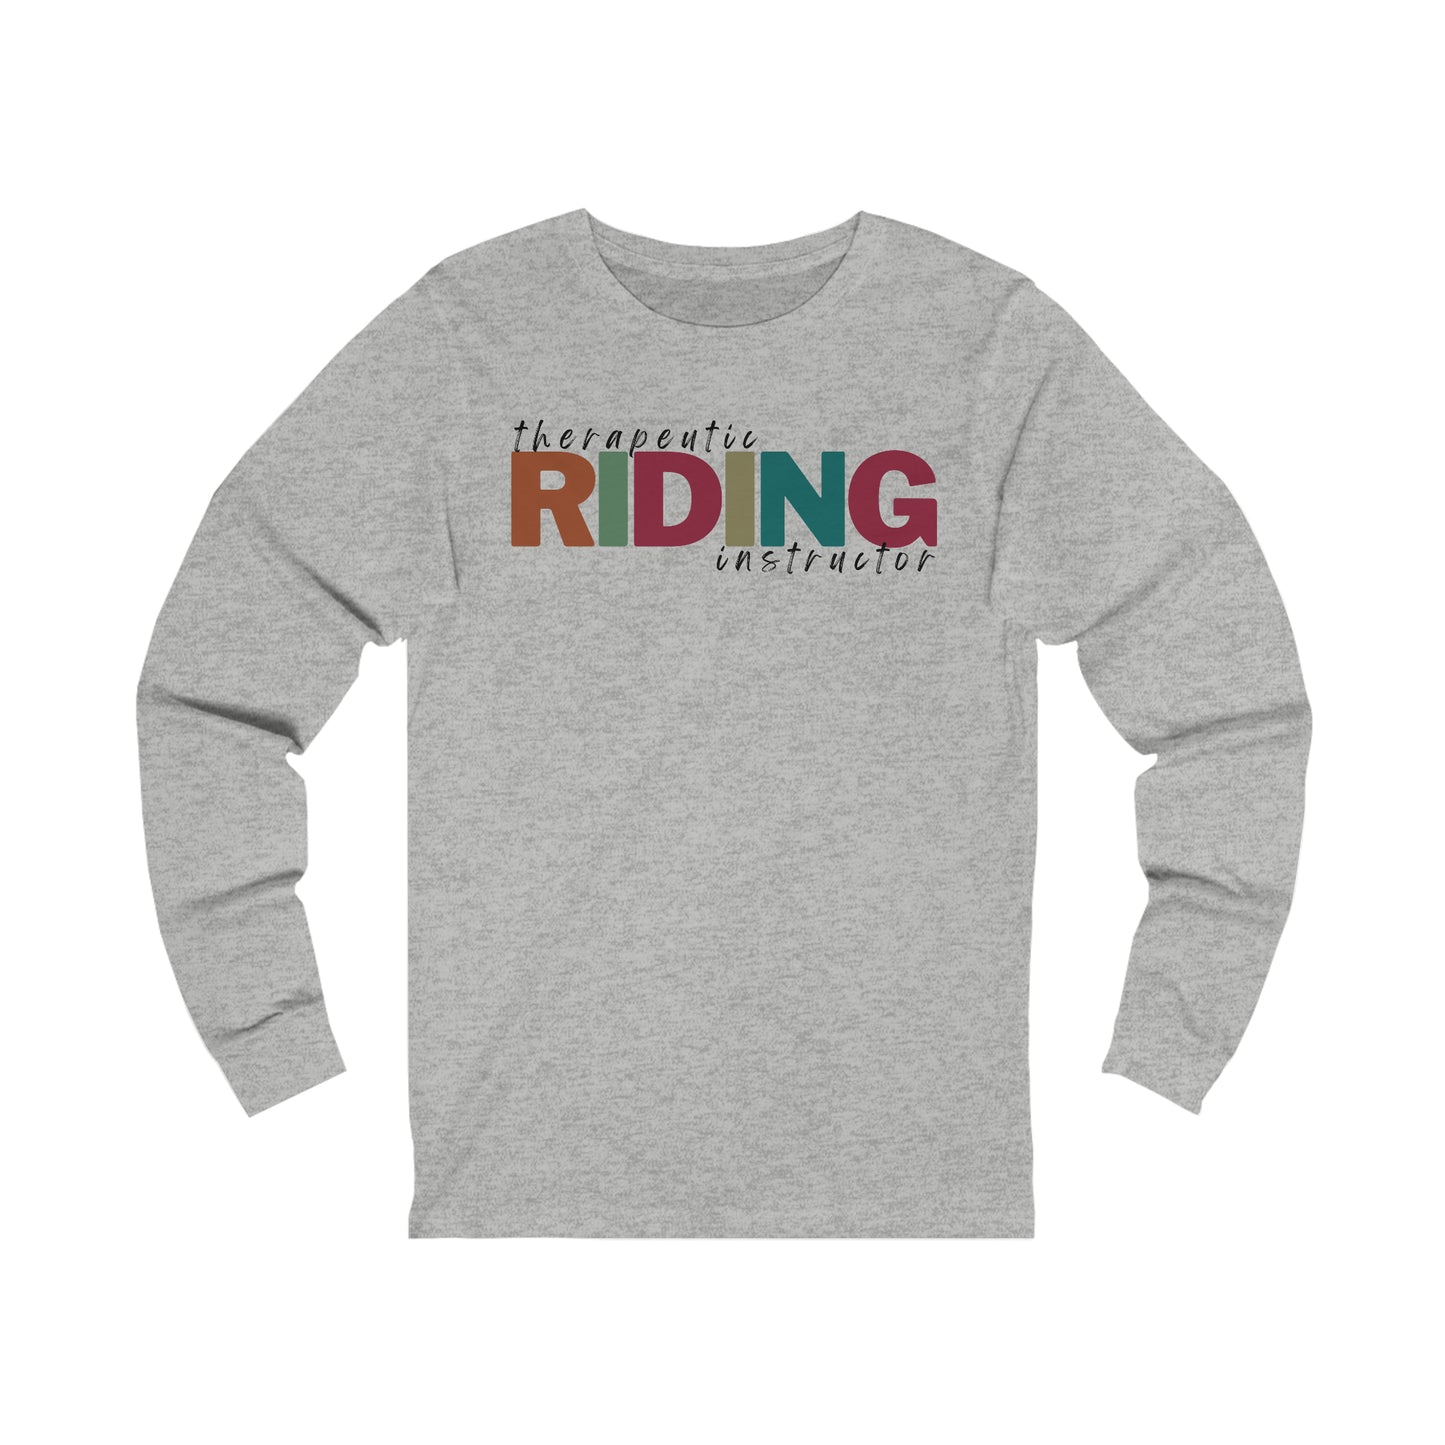 Therapeutic Riding Instructor- unisex long sleeve shirt